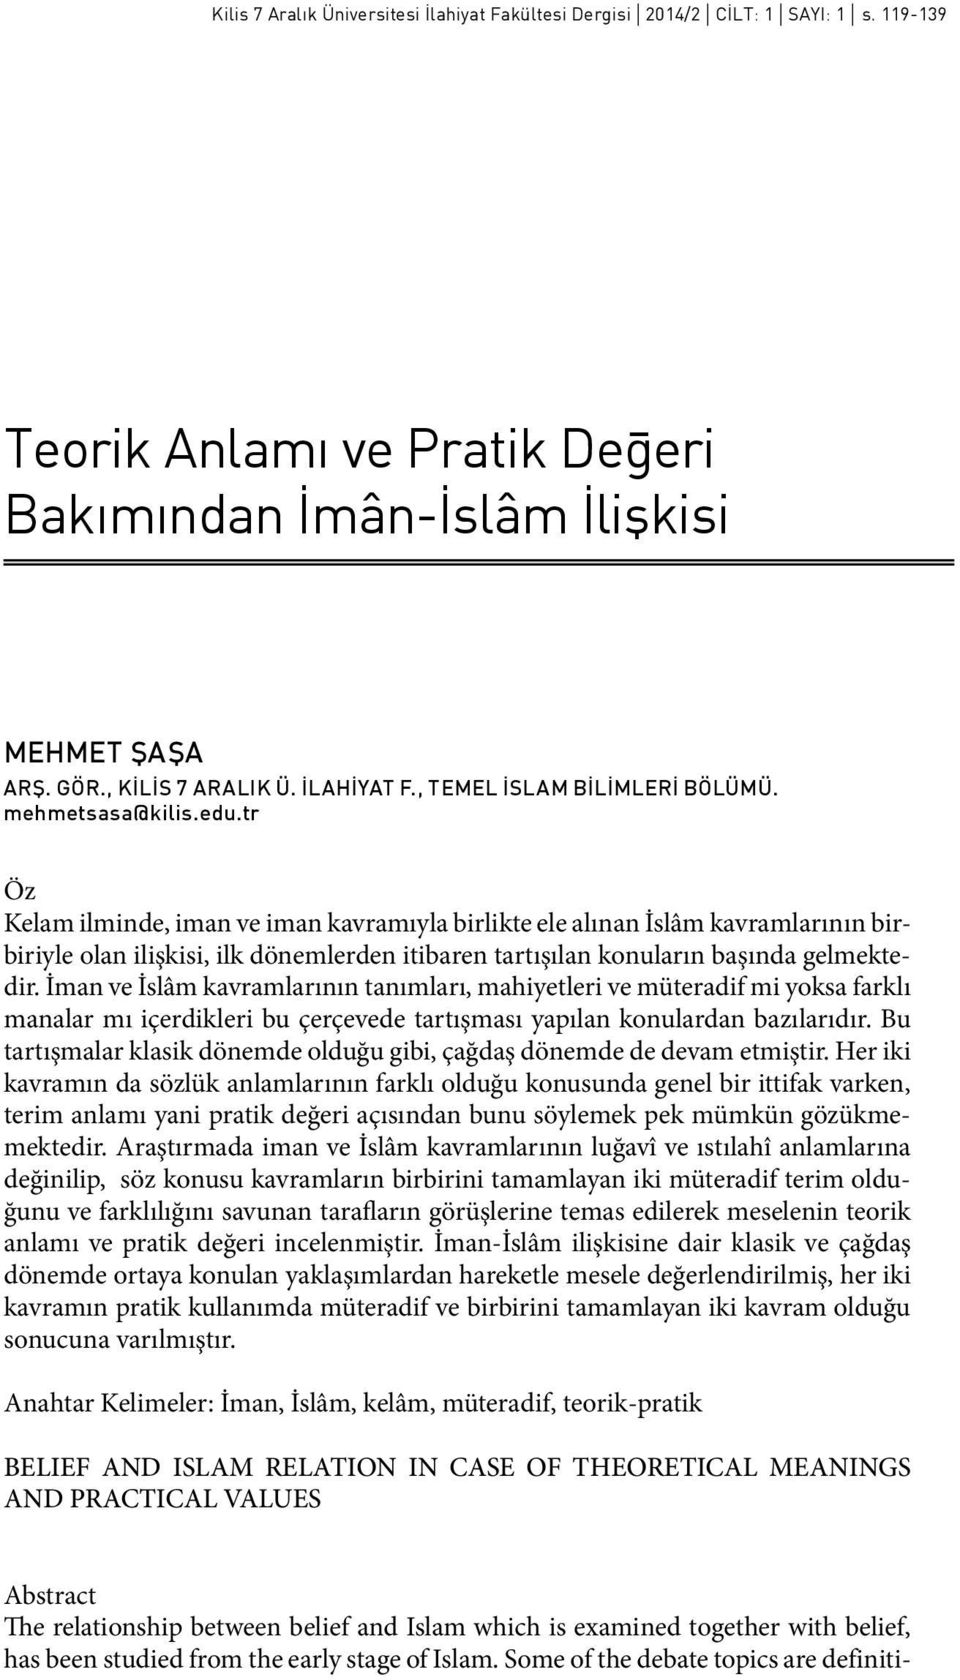 teorik anlami ve pratik degeri bakimindan iman islam iliskisi pdf free download